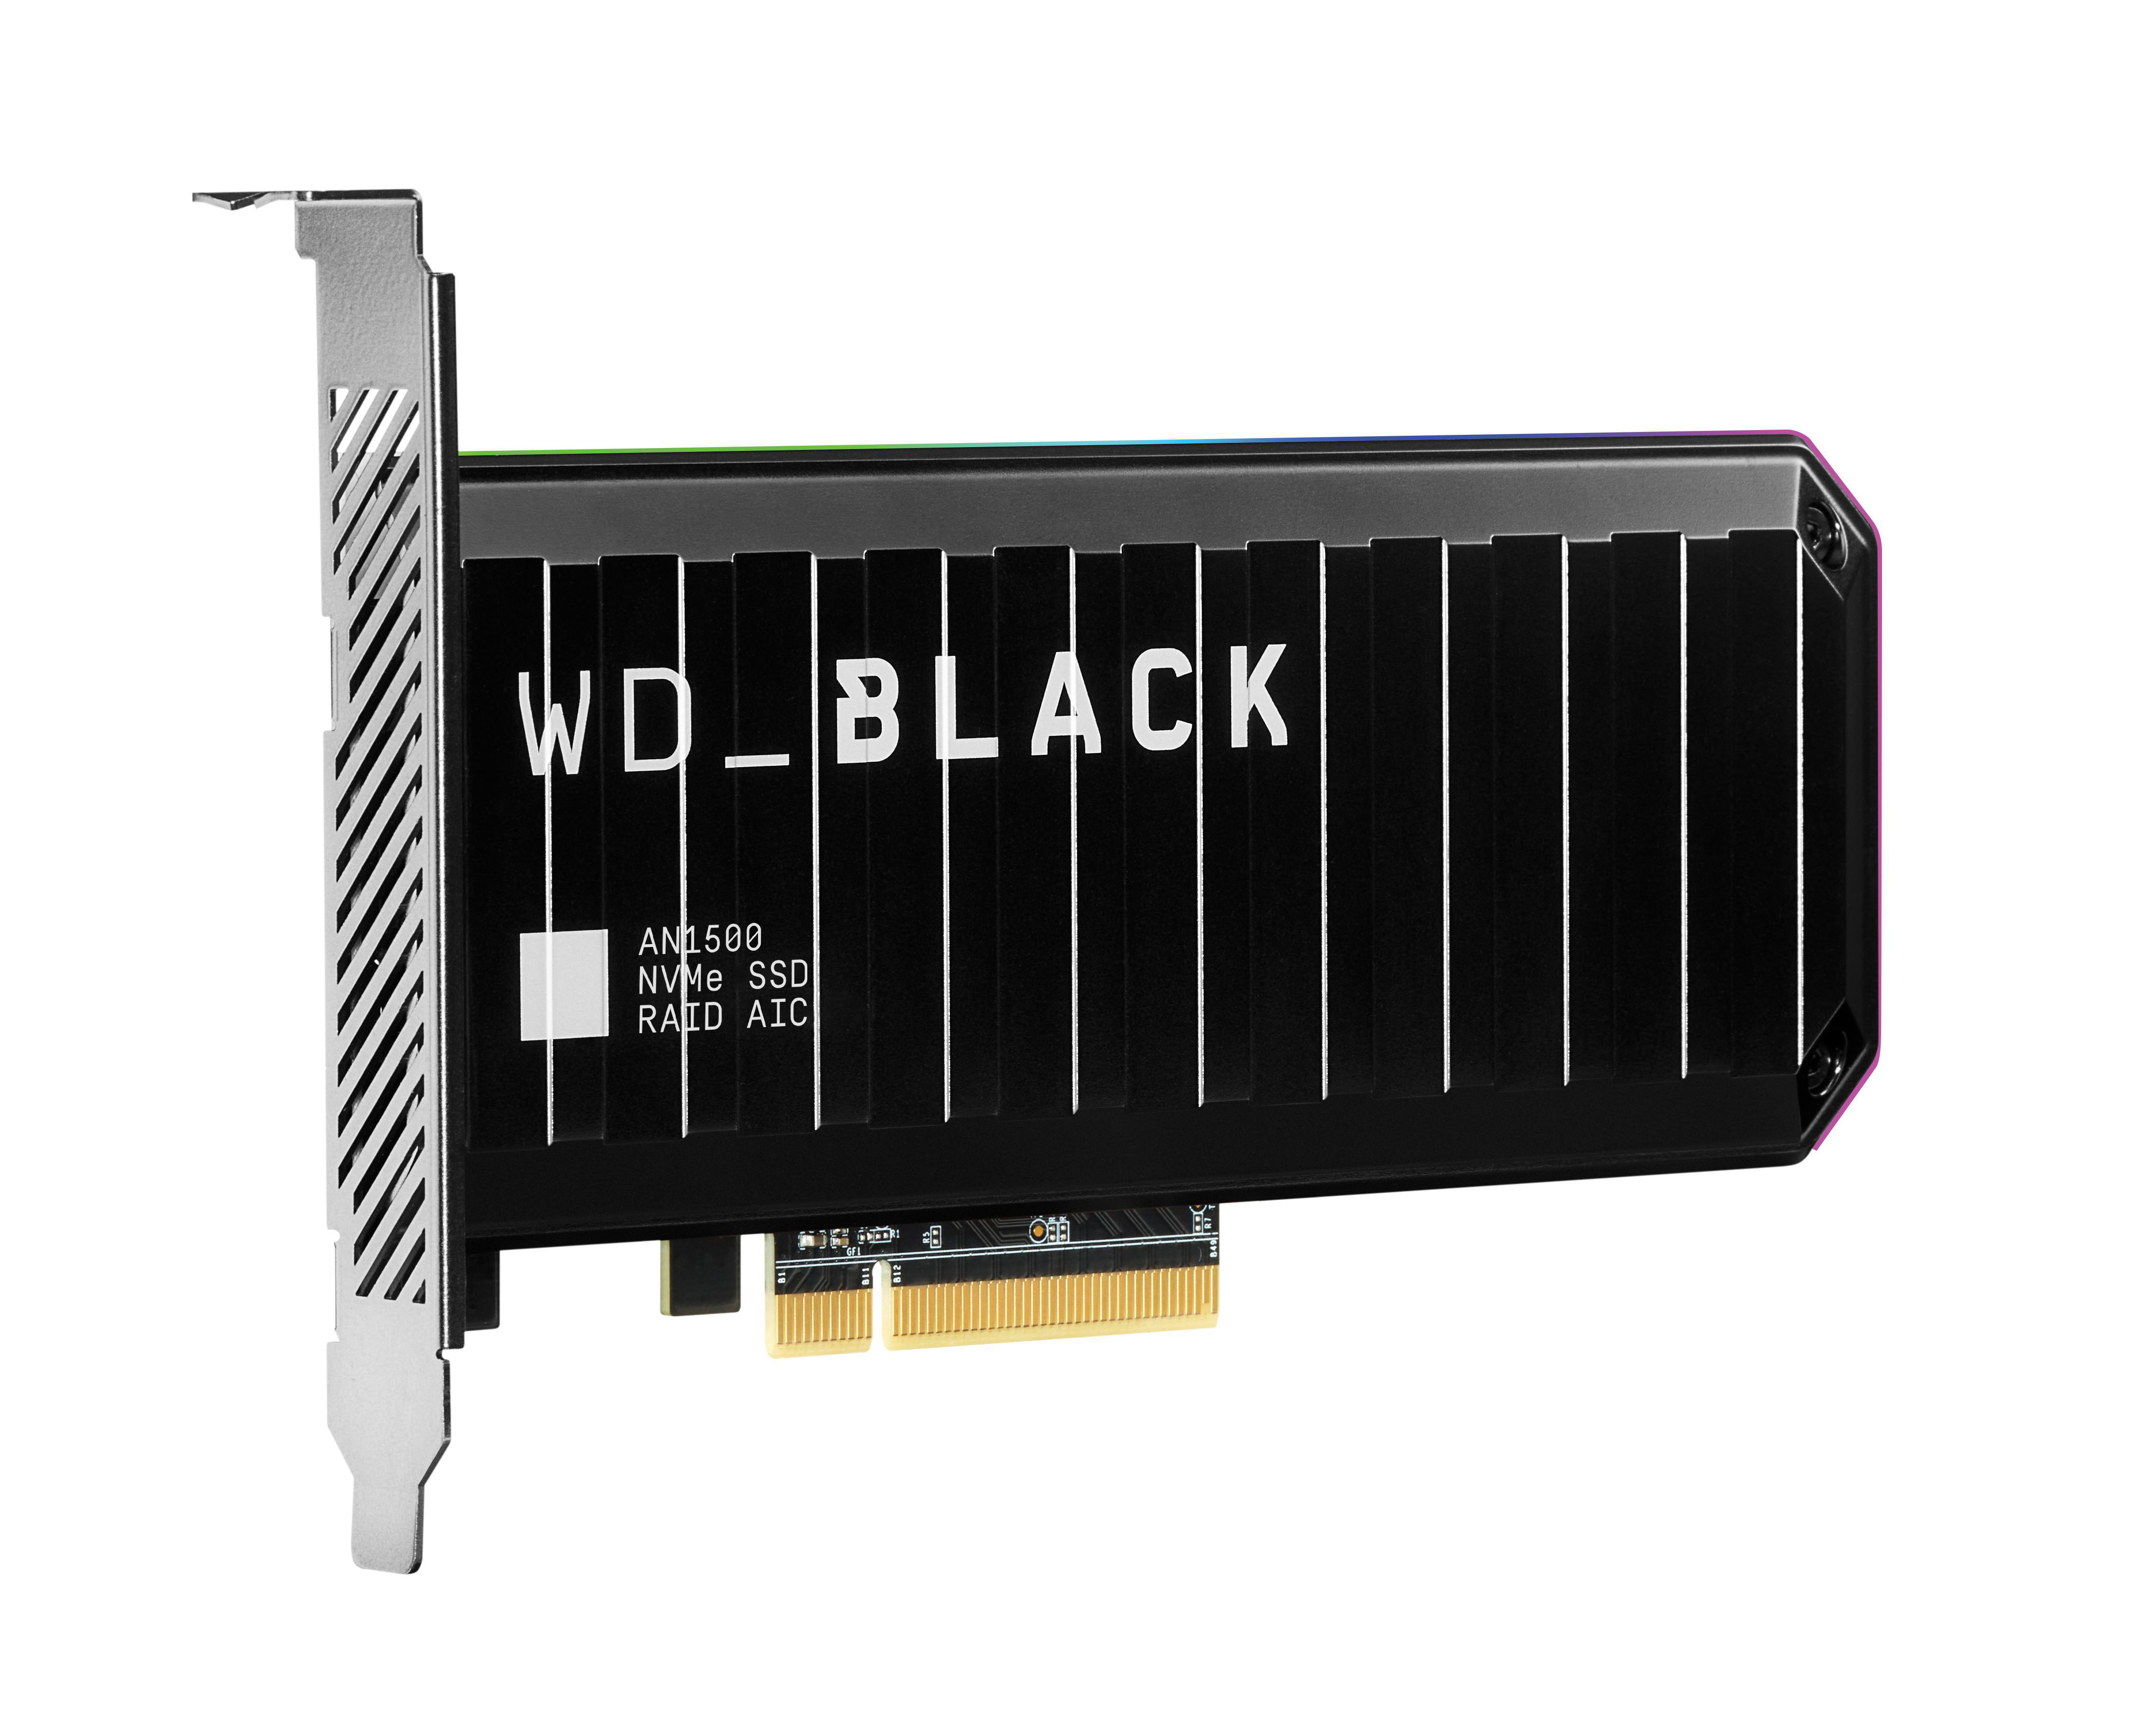 WD_BLACK AN1500 Speicher intern PCIe, TB SSD Bulk, 4 via M.2